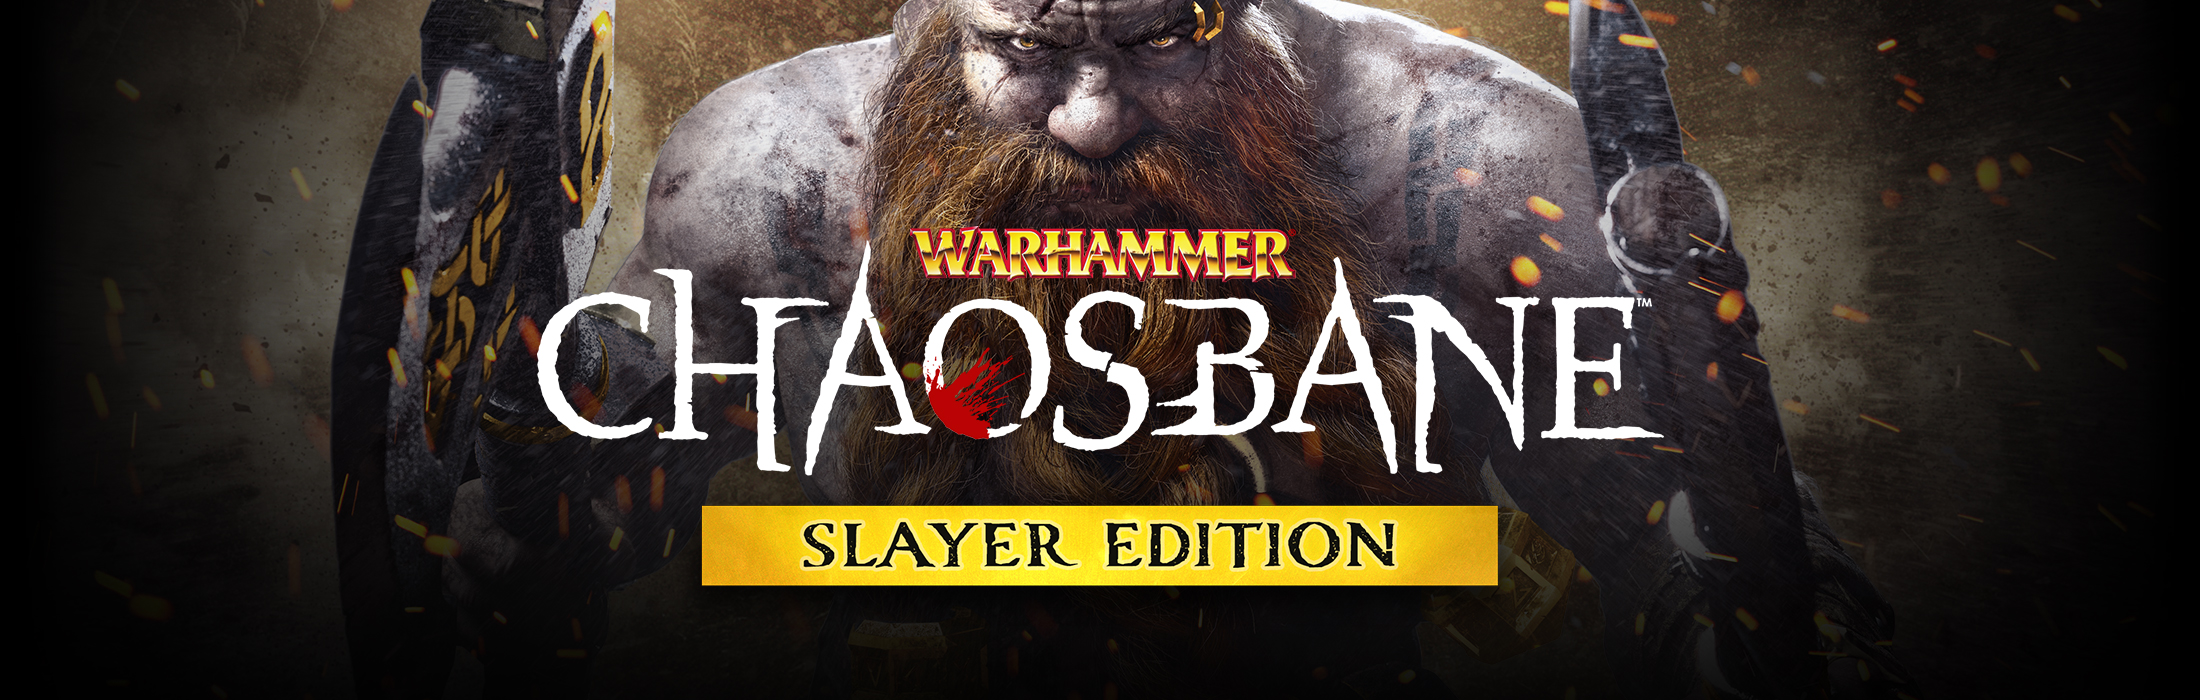 chaosbane slayer edition download free